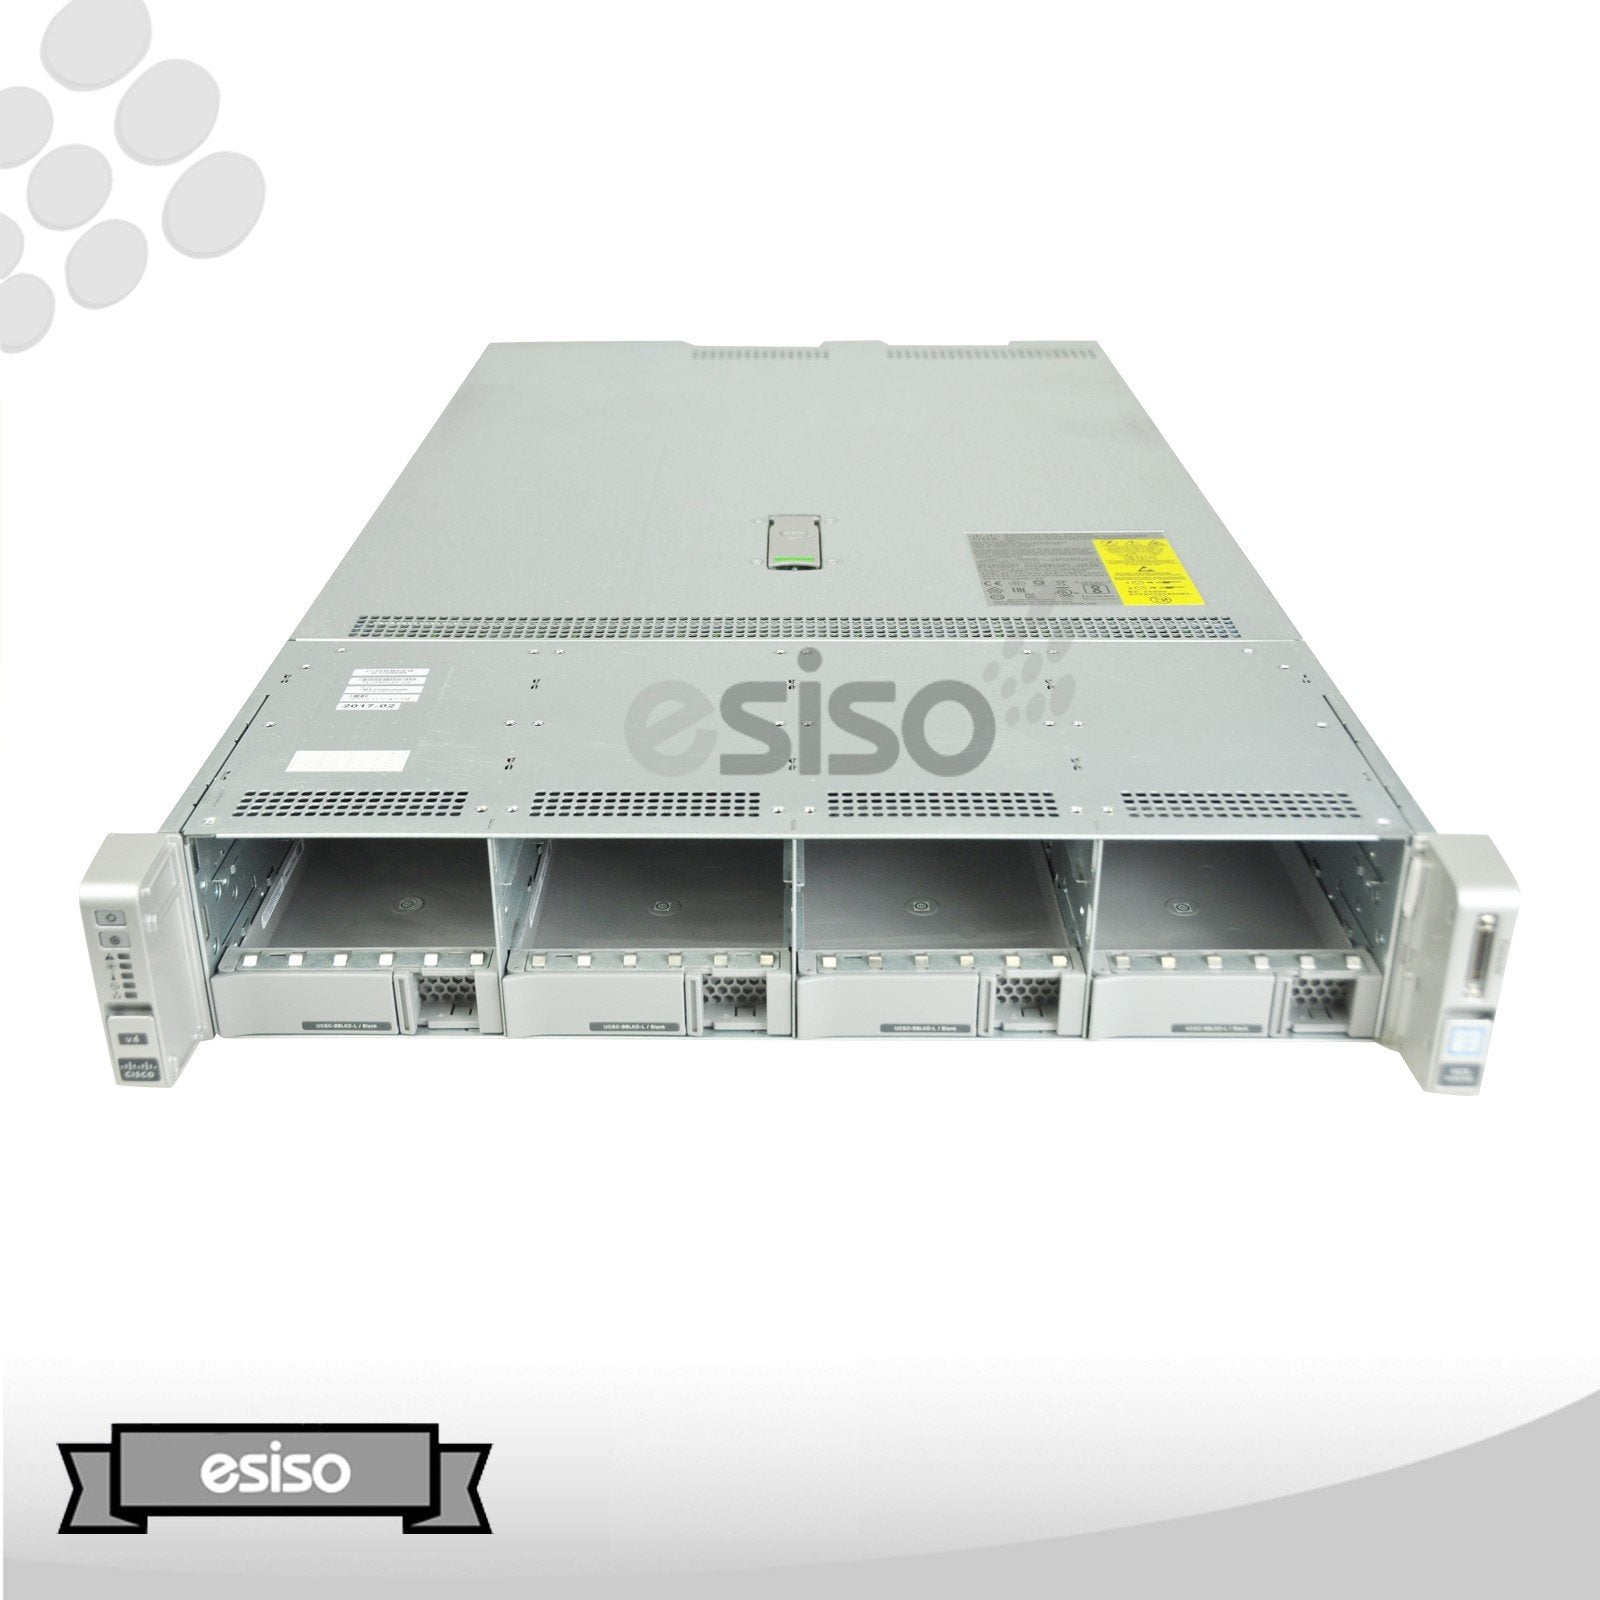 CISCO UCS C240 M4 12LFF 2x 16 CORE E5-2698v3 2.3GHz 32GB RAM NO HDD NO RAIL